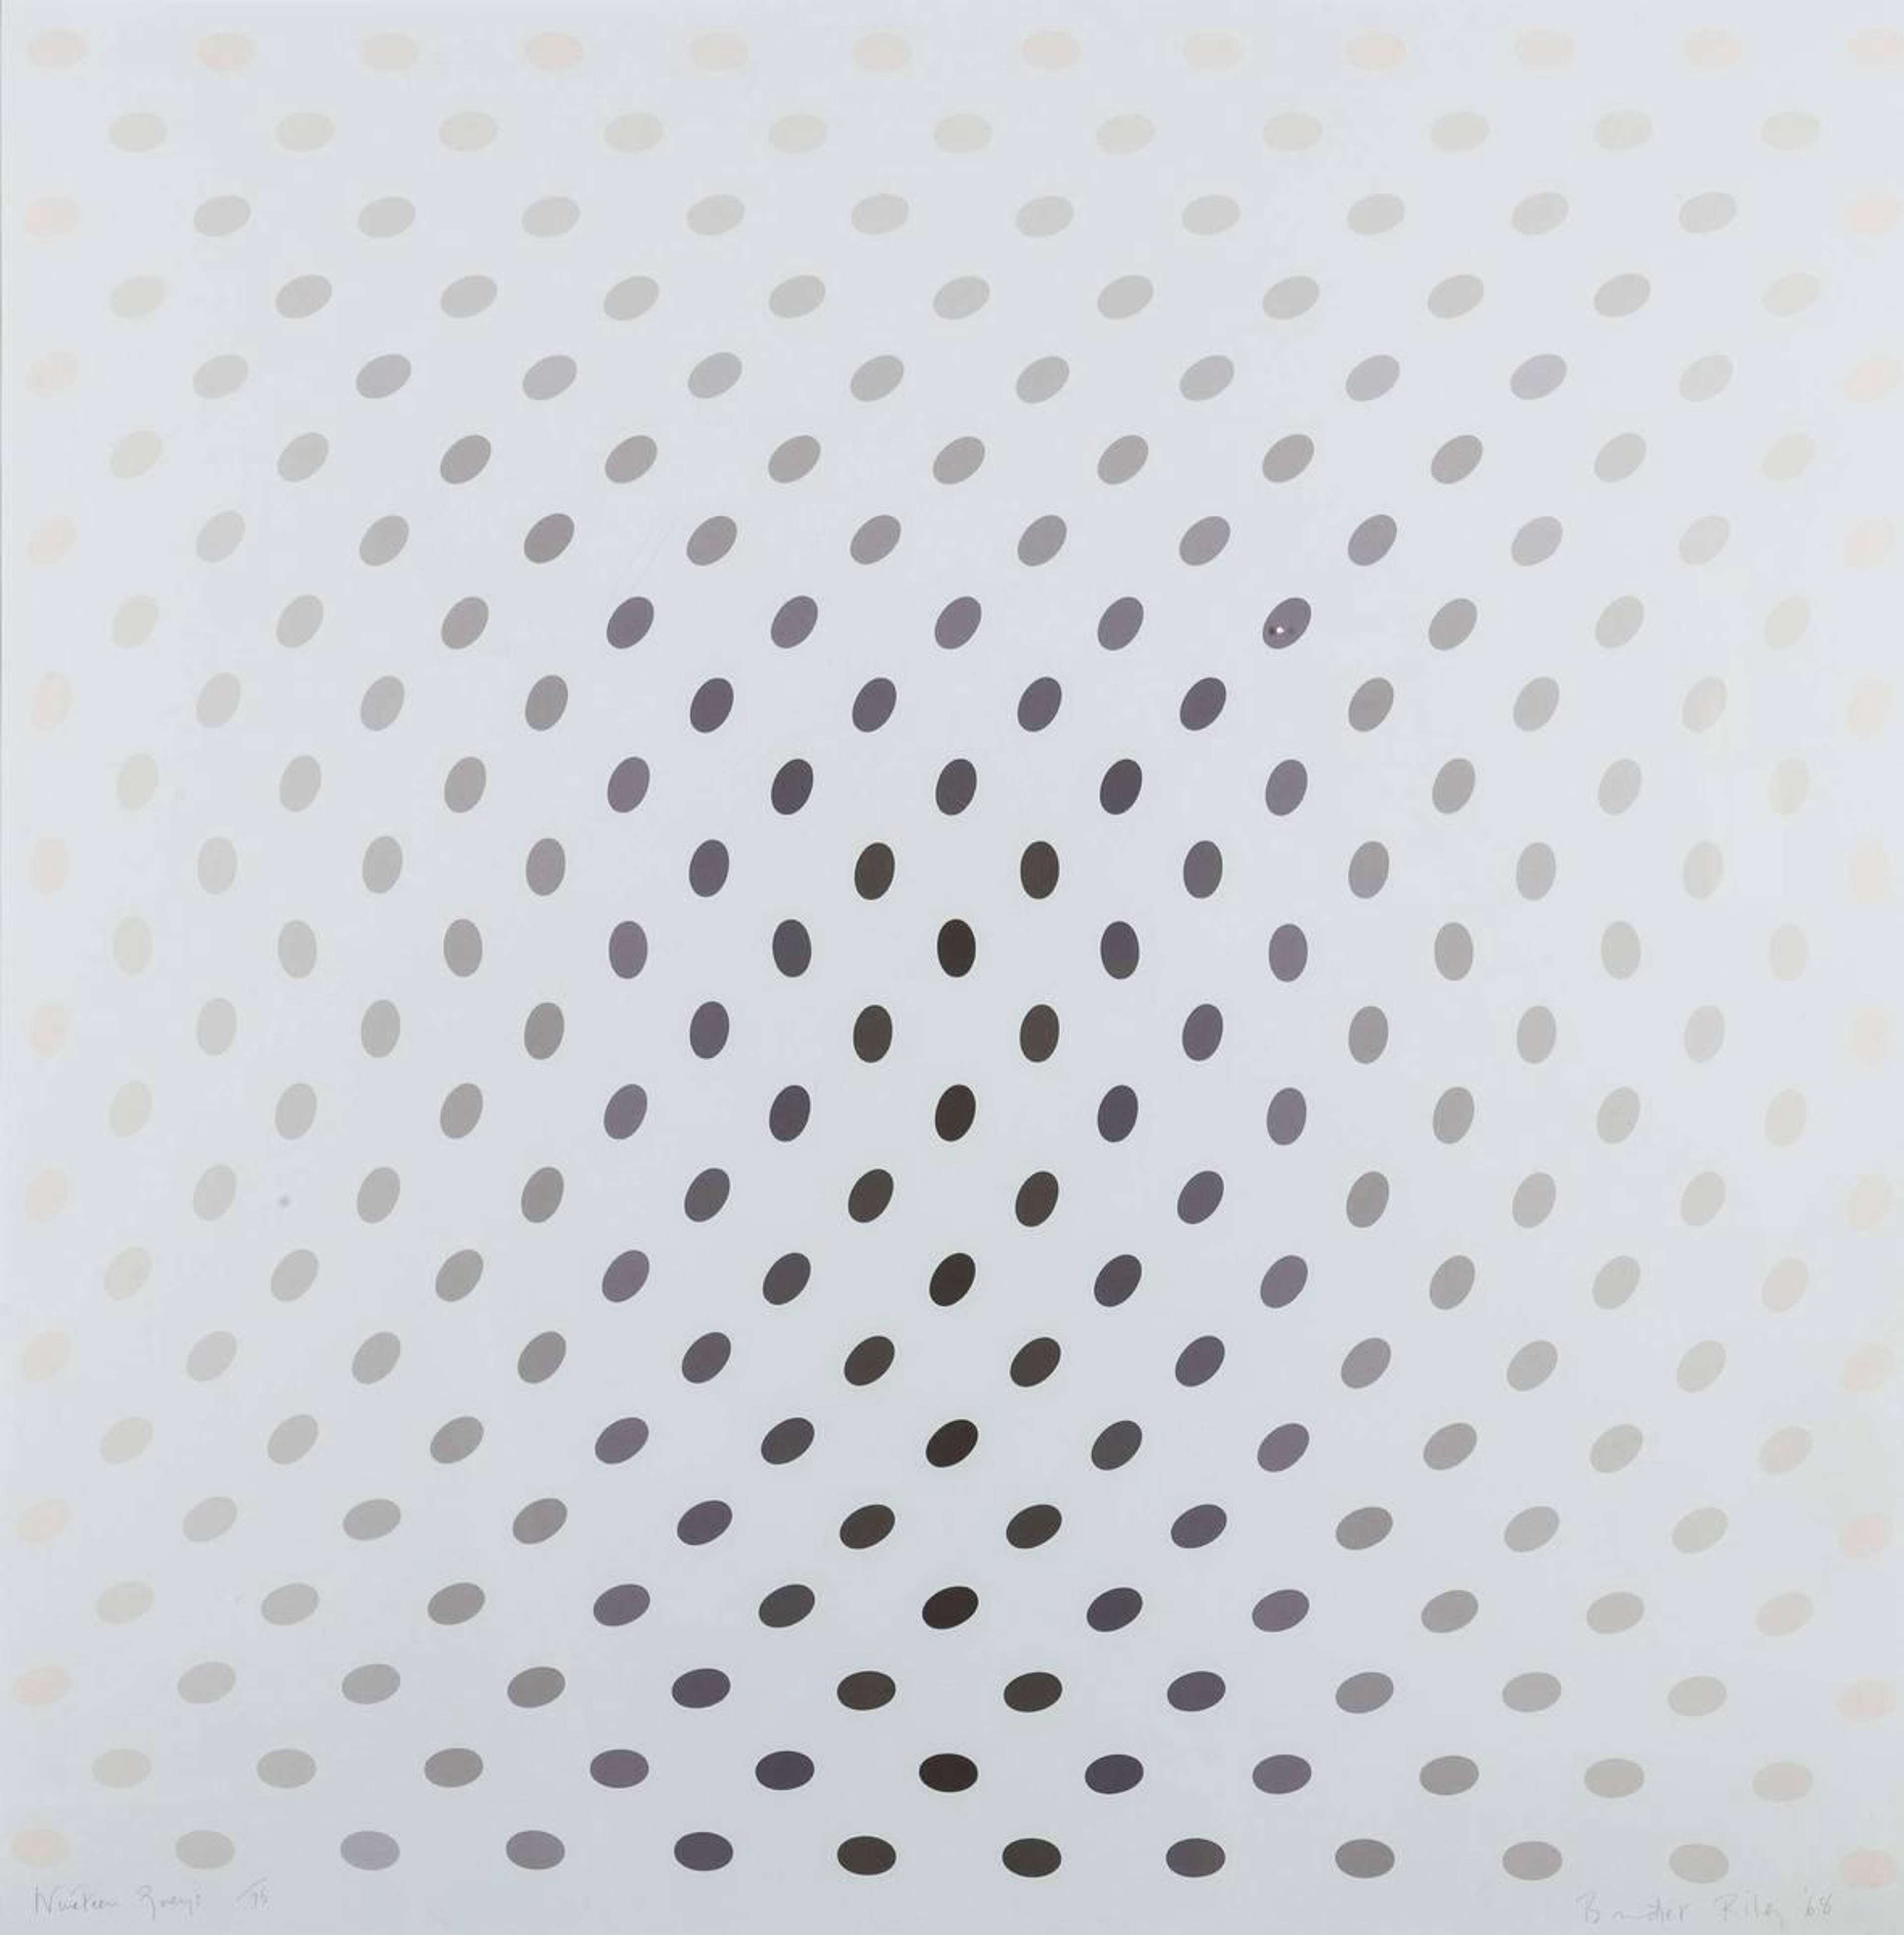 Bridget Riley’s Nineteen Greys C. An Op Art screenprint of gradient black dots against a grey background.